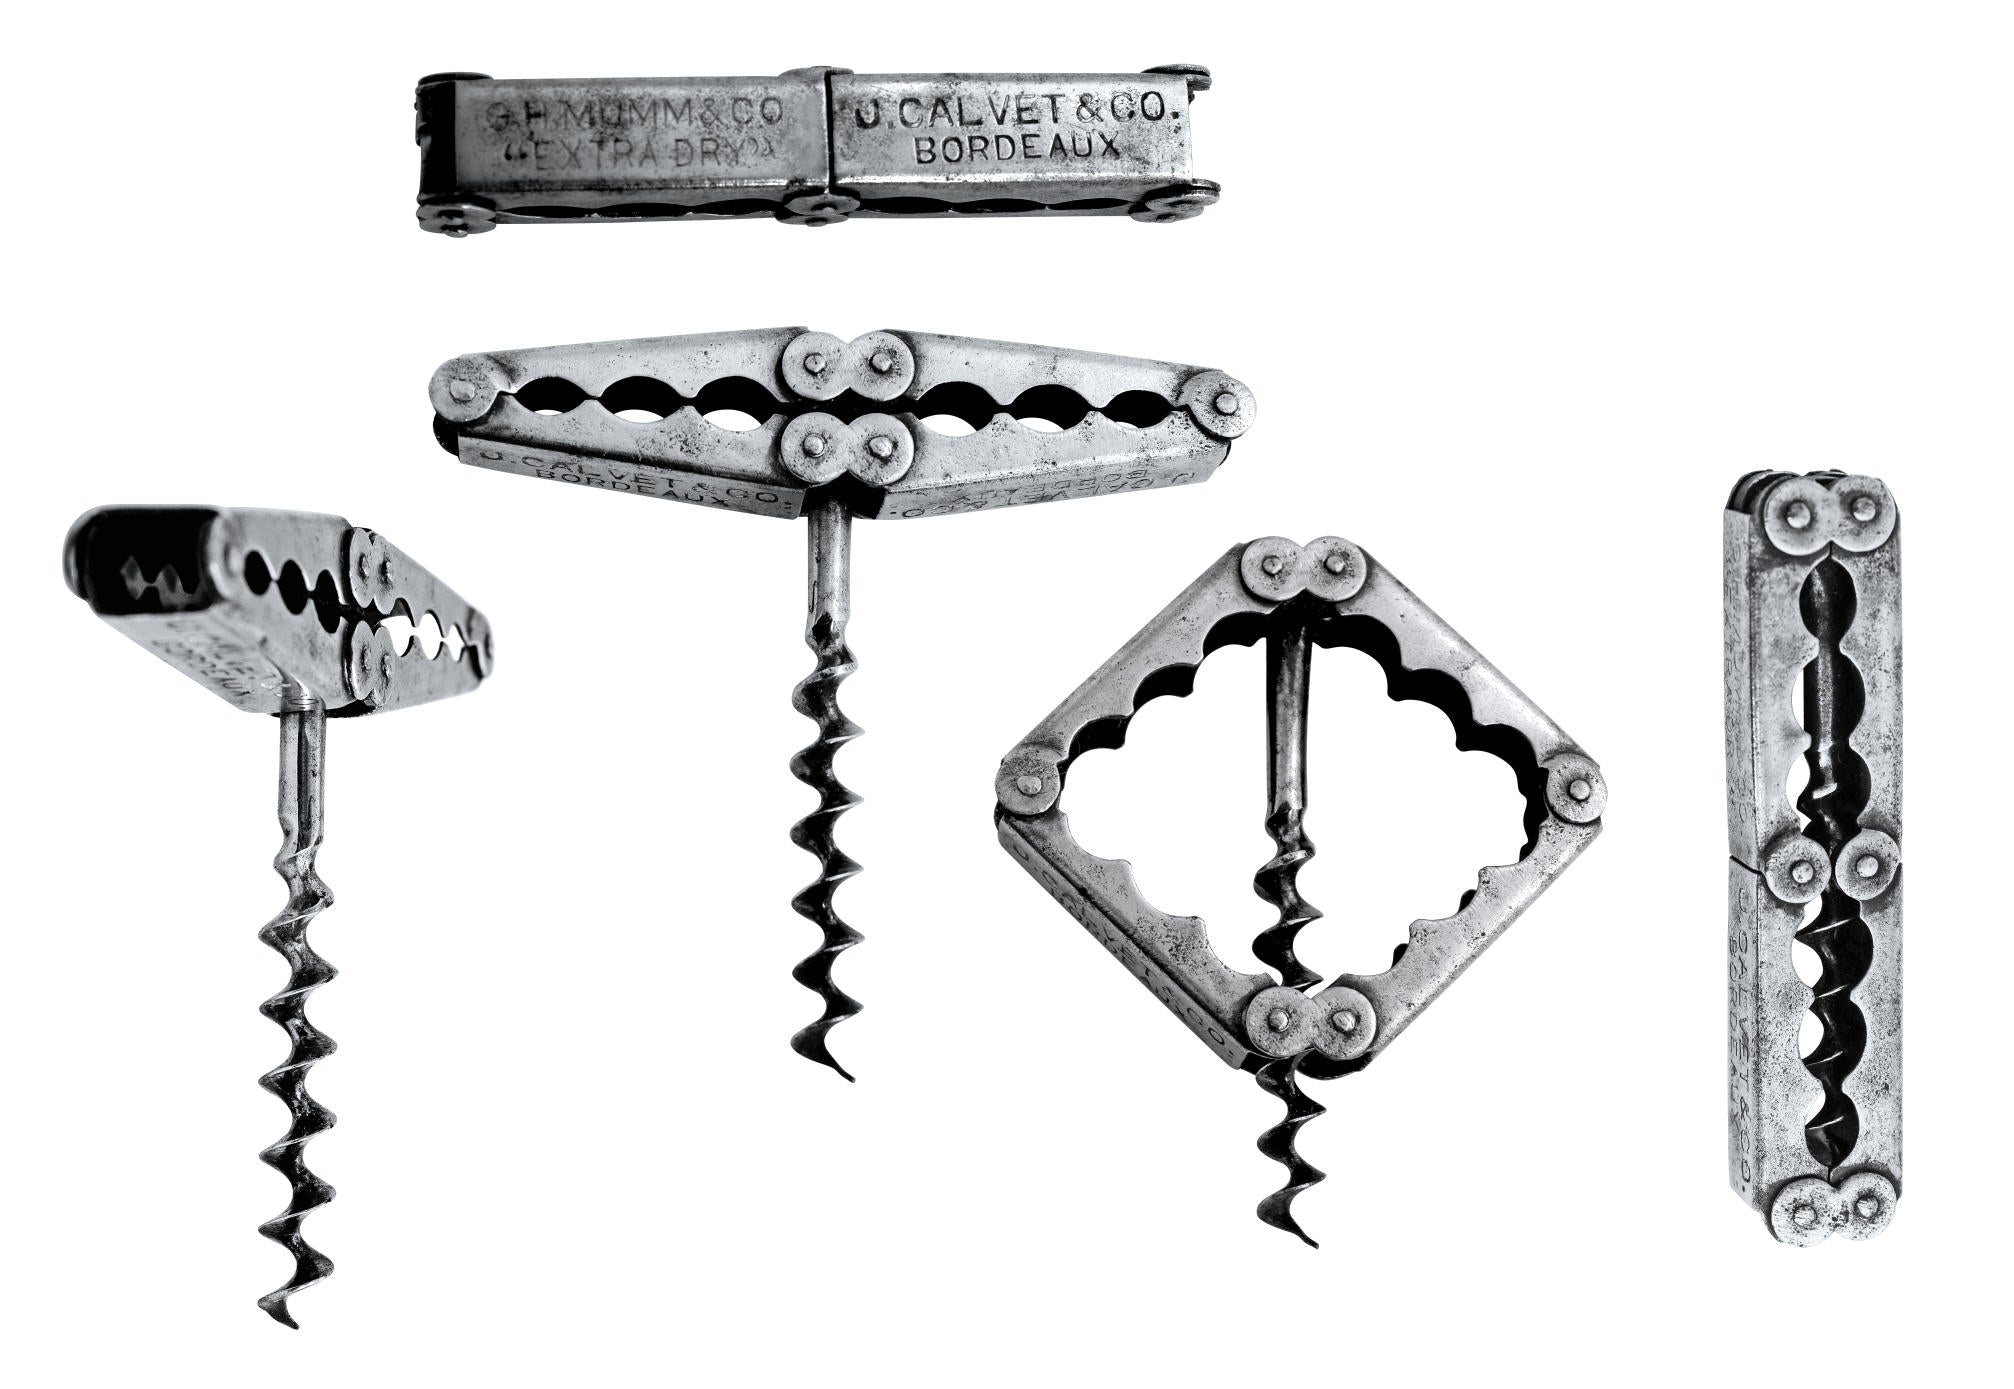 TIRE BOUCHON FRENCH CHAMPAGNE TAP LOT 4 CORKSCREW - Listing # 3884 -  International Sale: Antique,Vintage and Collectible, Antique Corkscrews